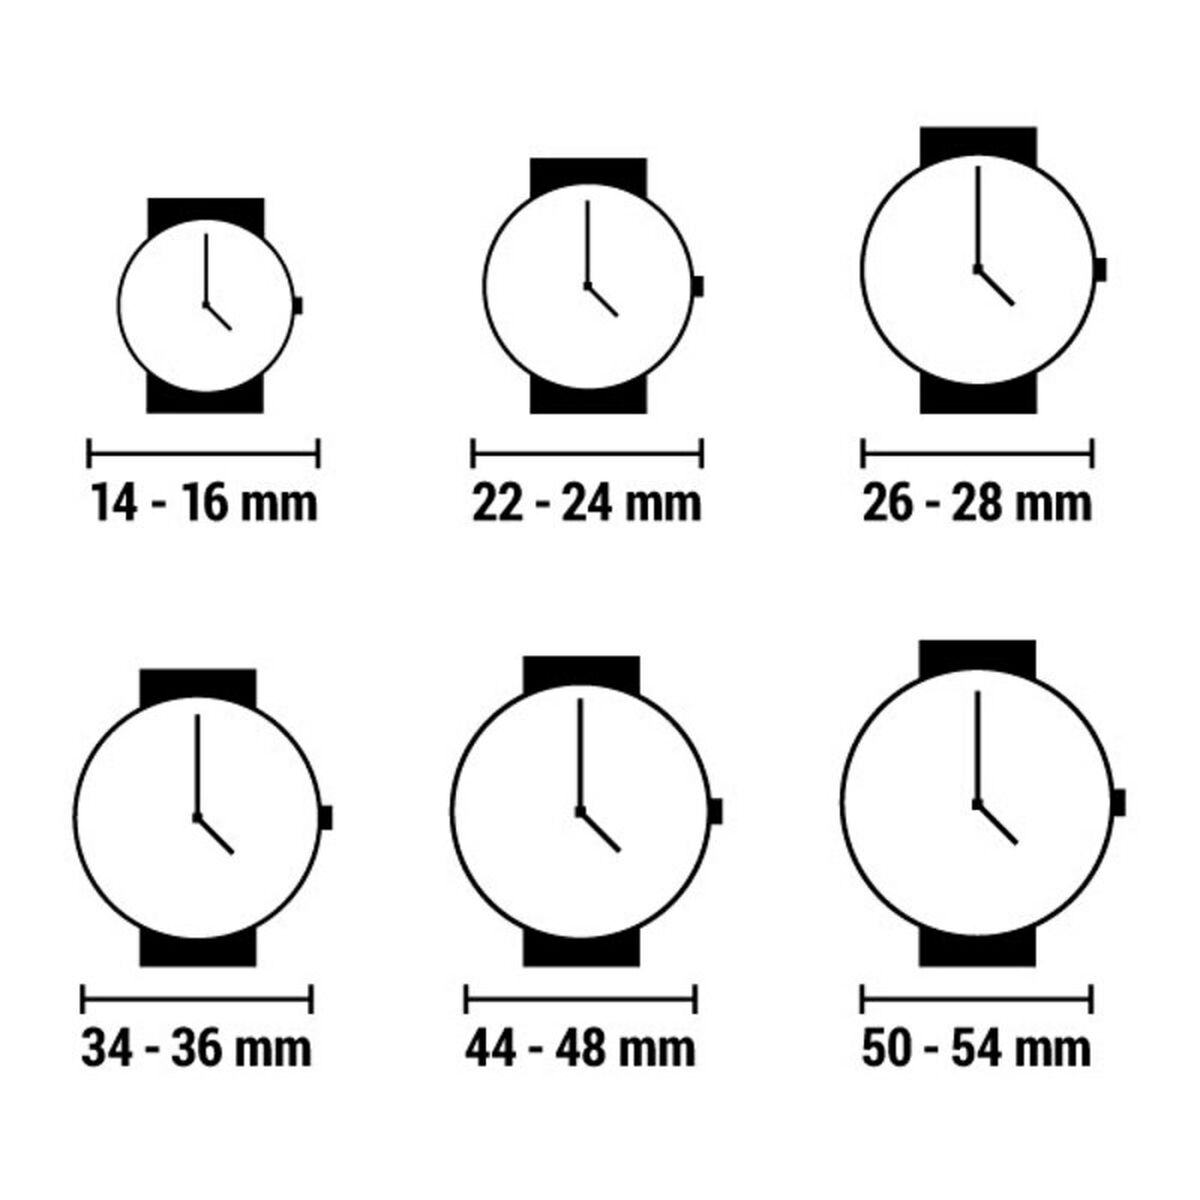 Horloge Heren Bobroff BF0021 (Ø 42 mm)